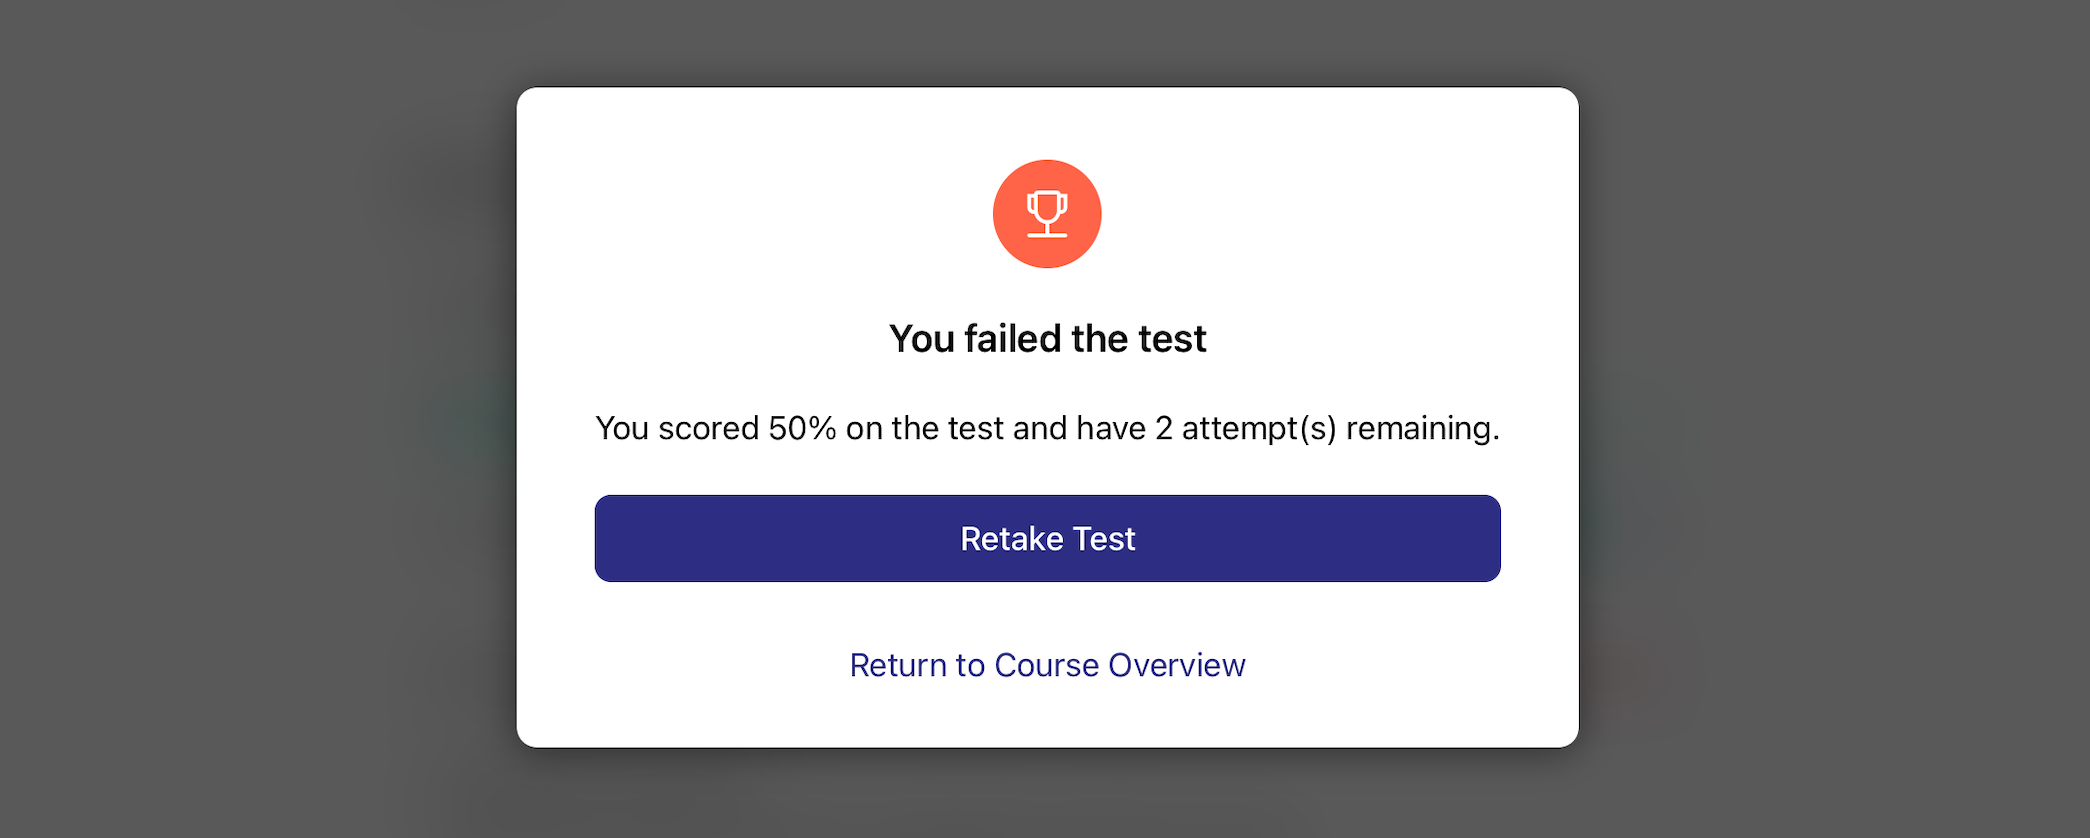 Retake_Test_iOS-2.png